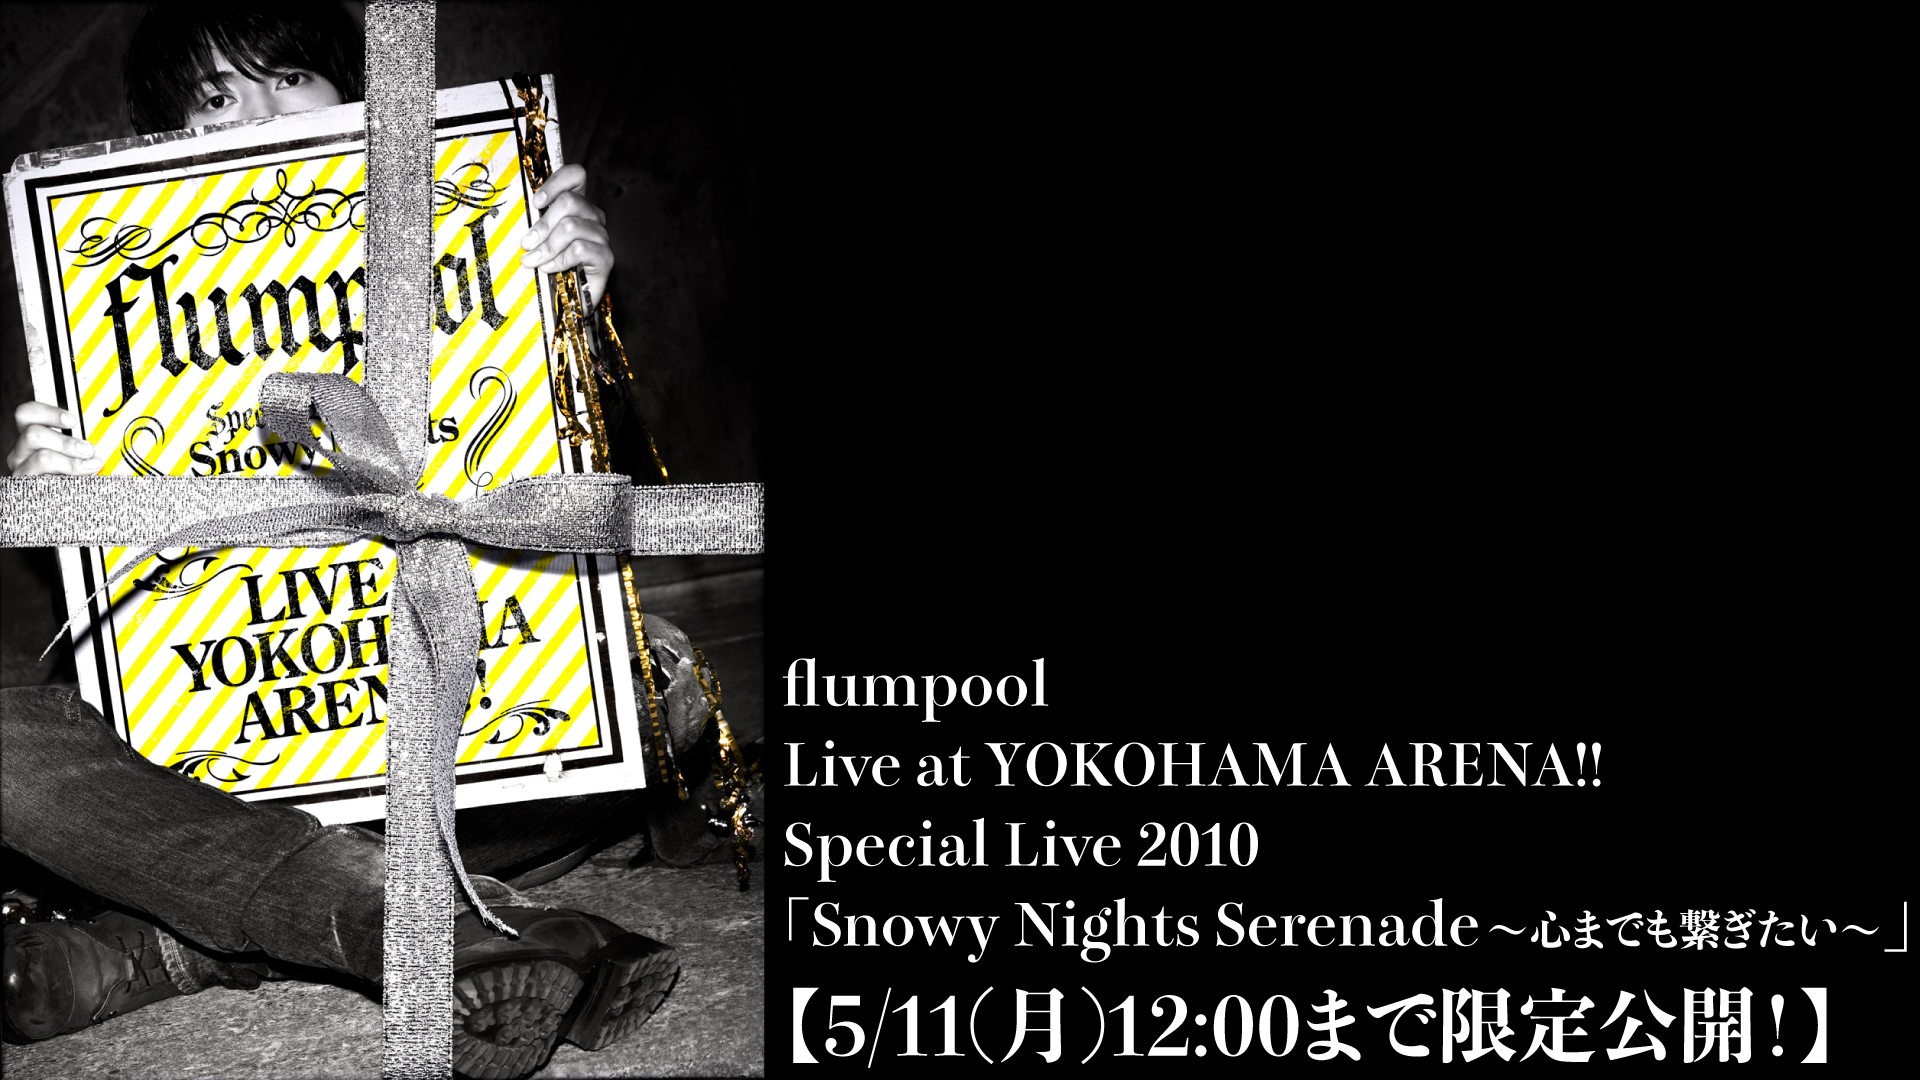 Flumpool Live At Yokohama Arena 2010 Snowy Nights Serenade 心までも繋ぎたい 期間限定でyoutubeプレミア公開 毎日更新 ライブ配信カレンダー